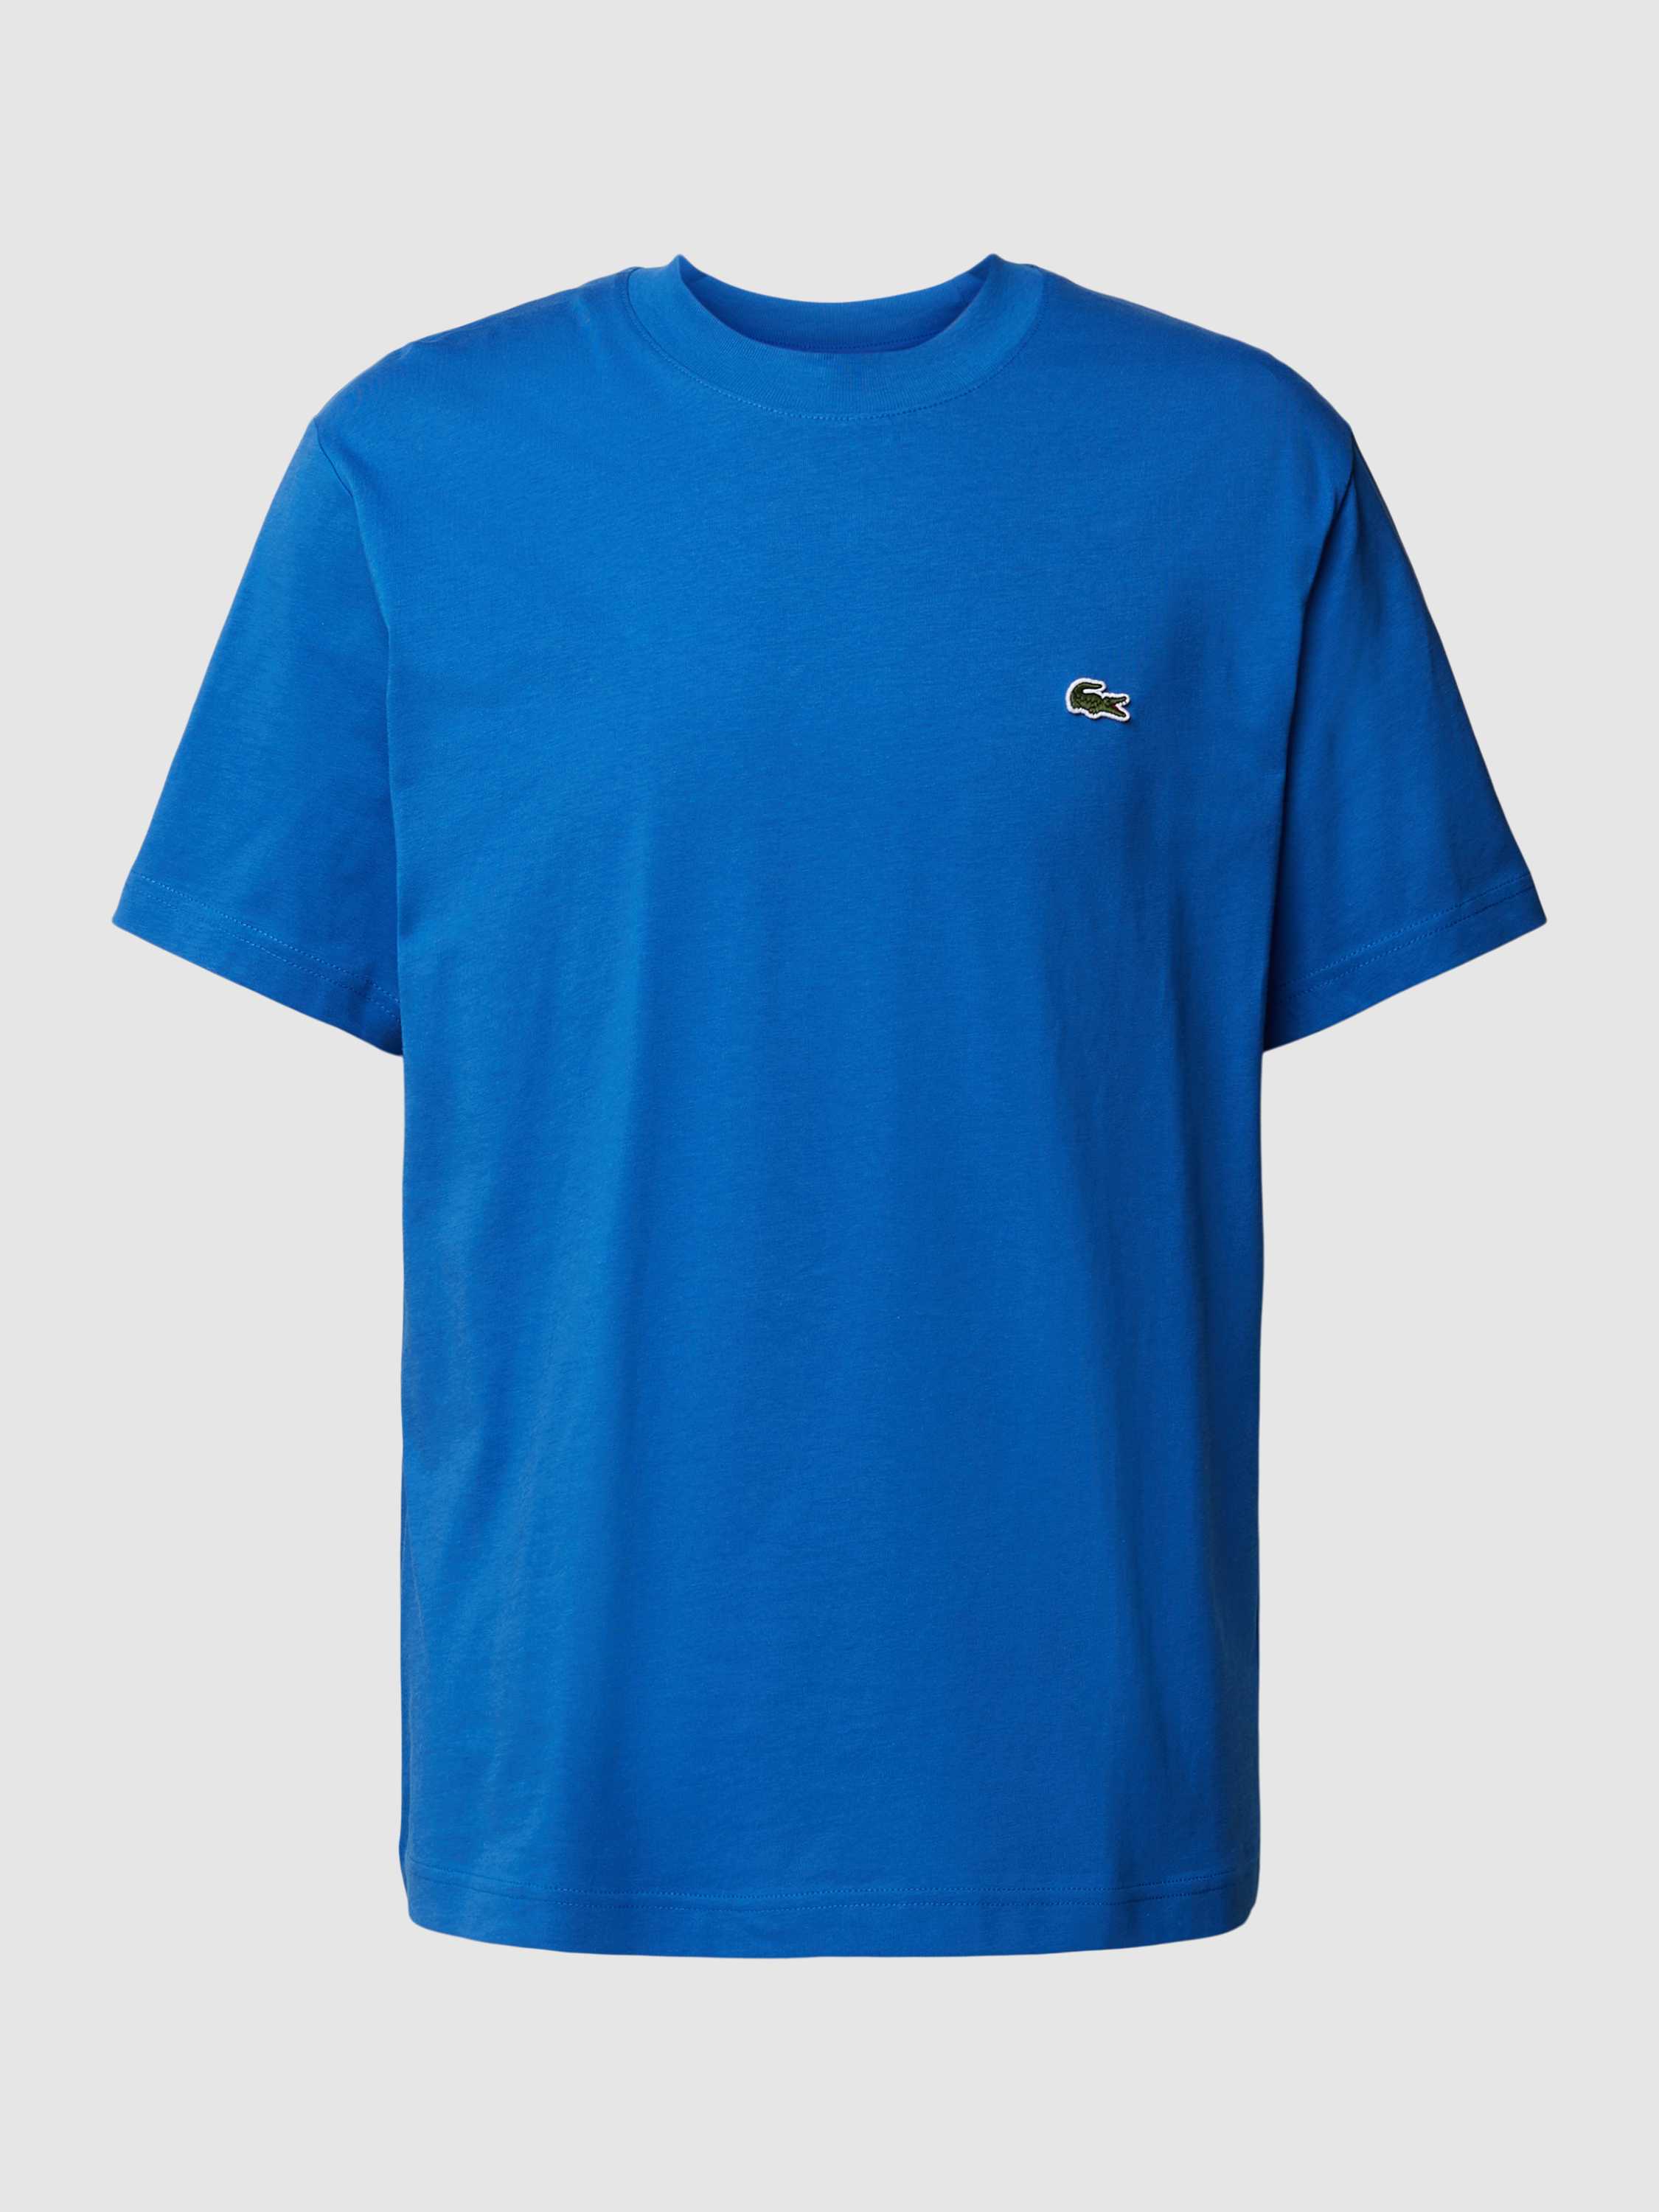 Lacoste T-shirt met ronde hals, model 'BASIC'